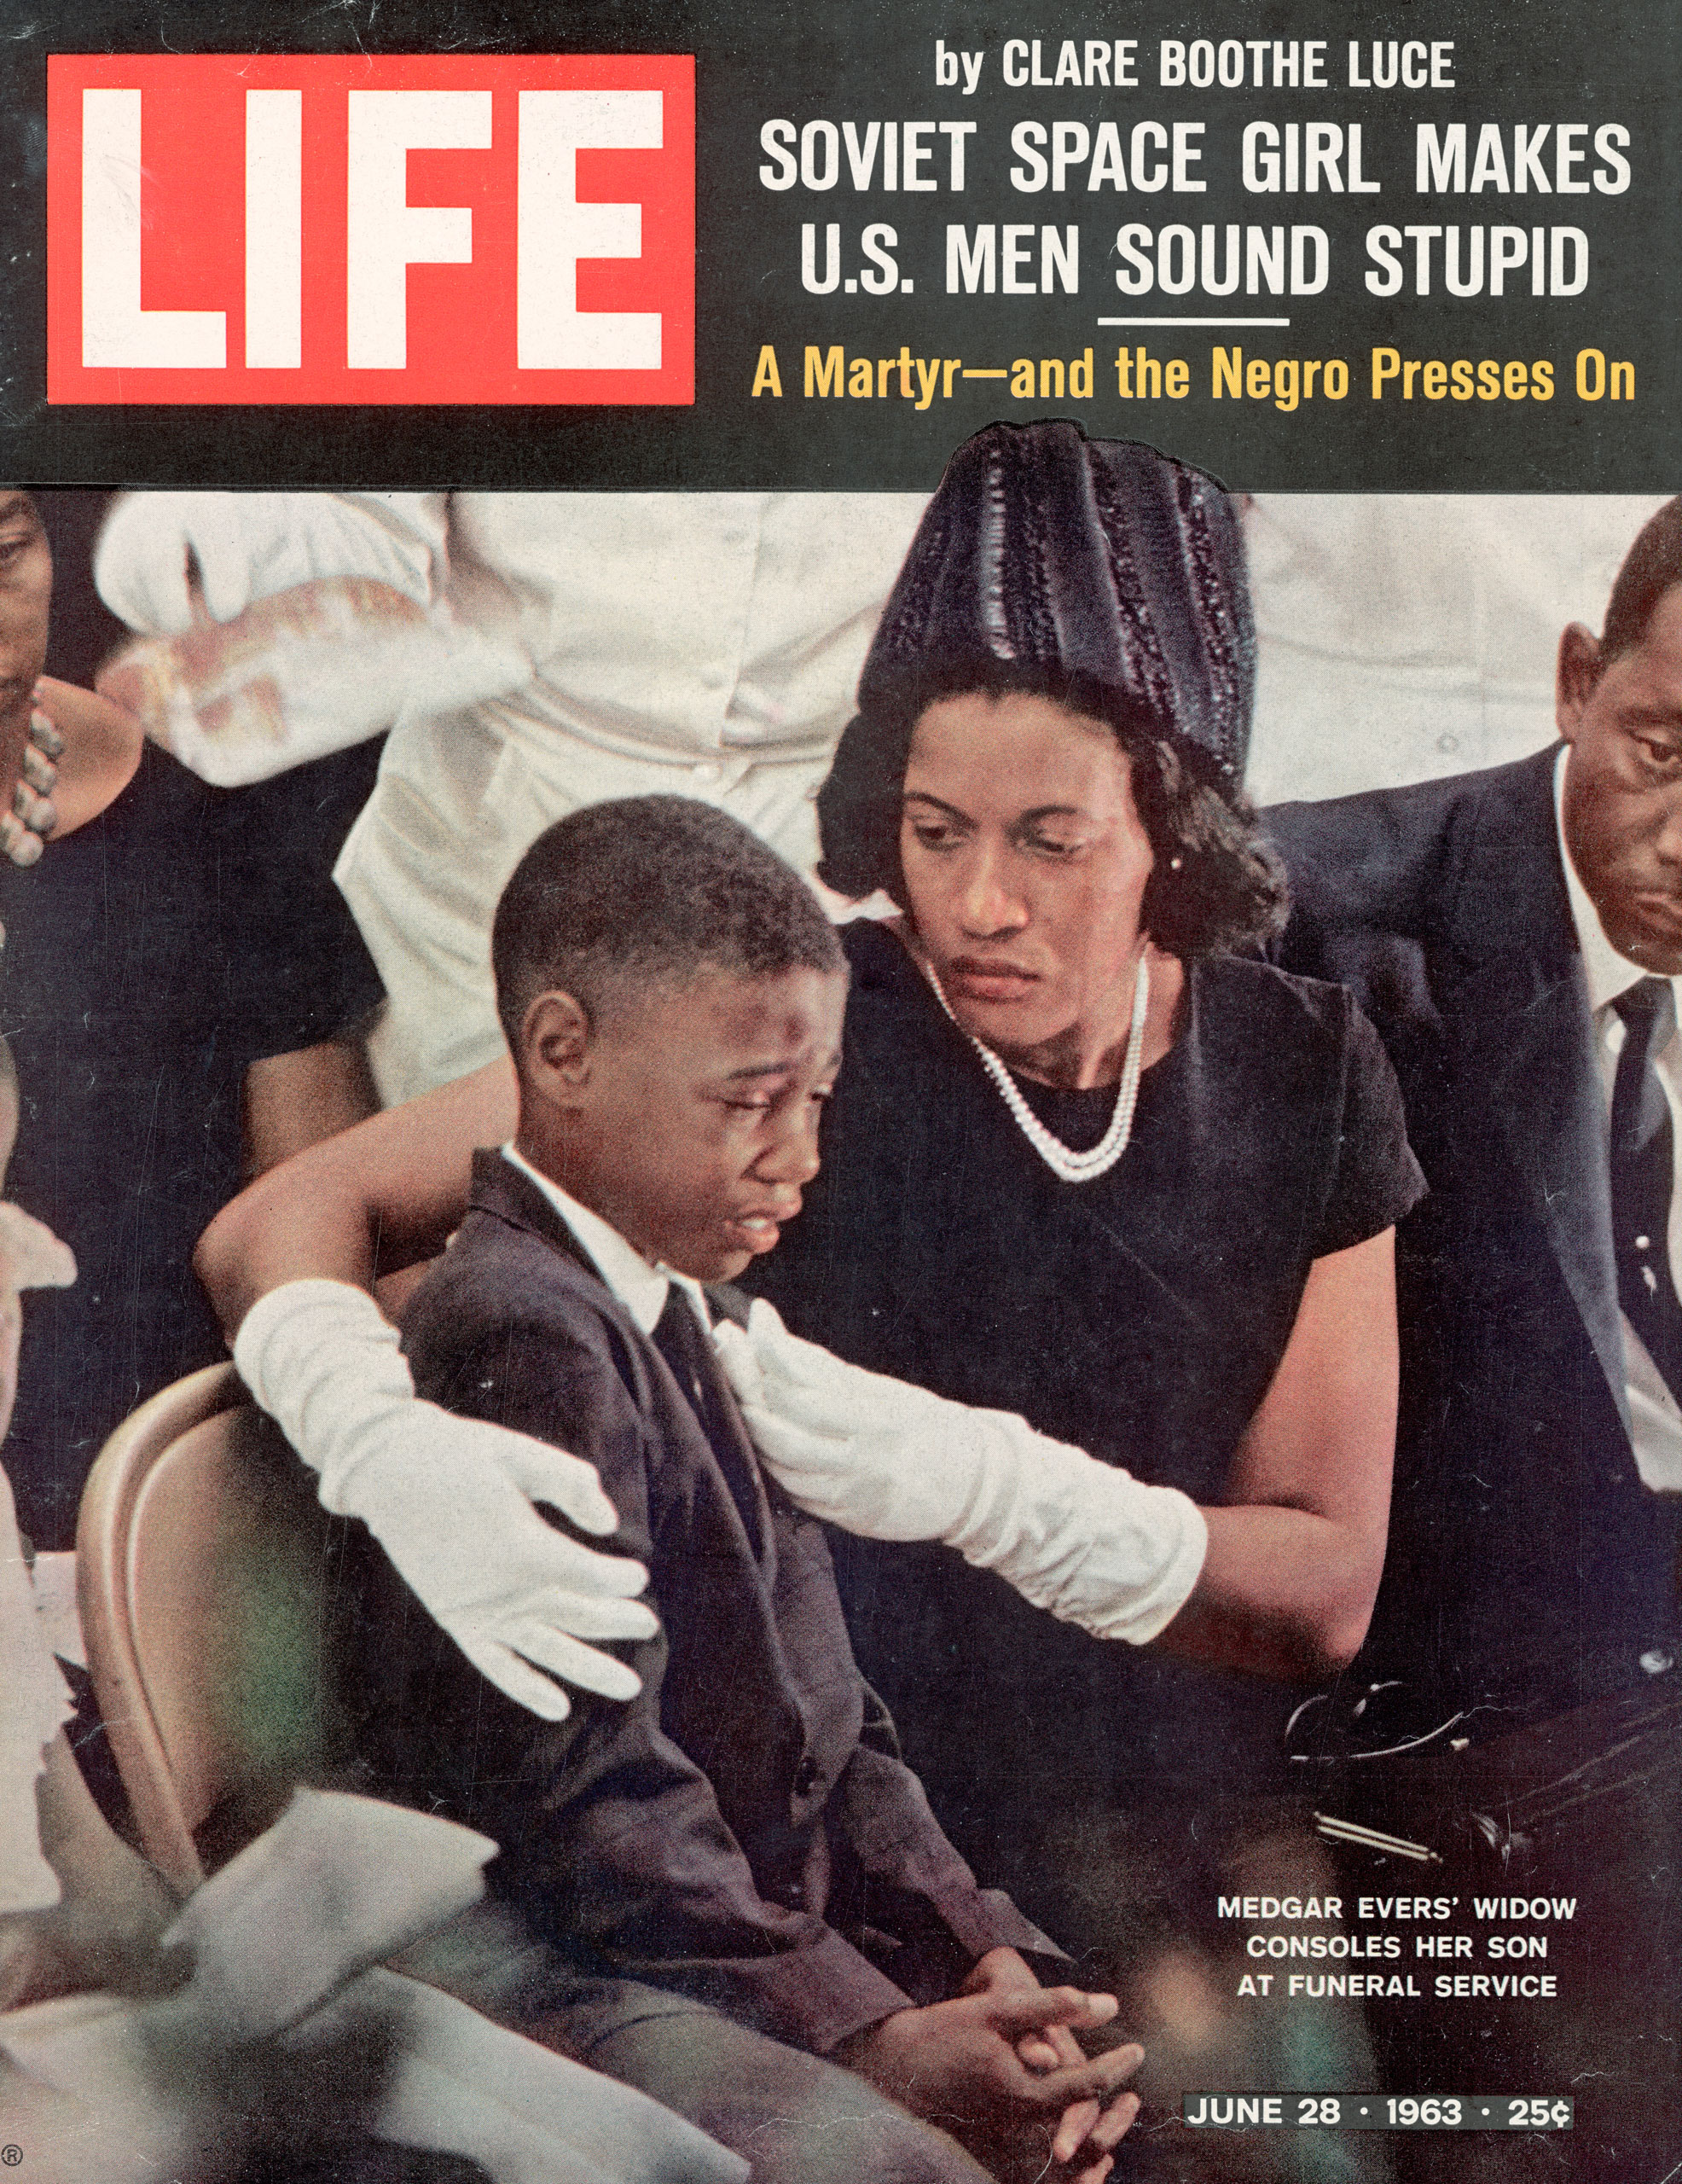 LIFE magazine, June 28, 1963.